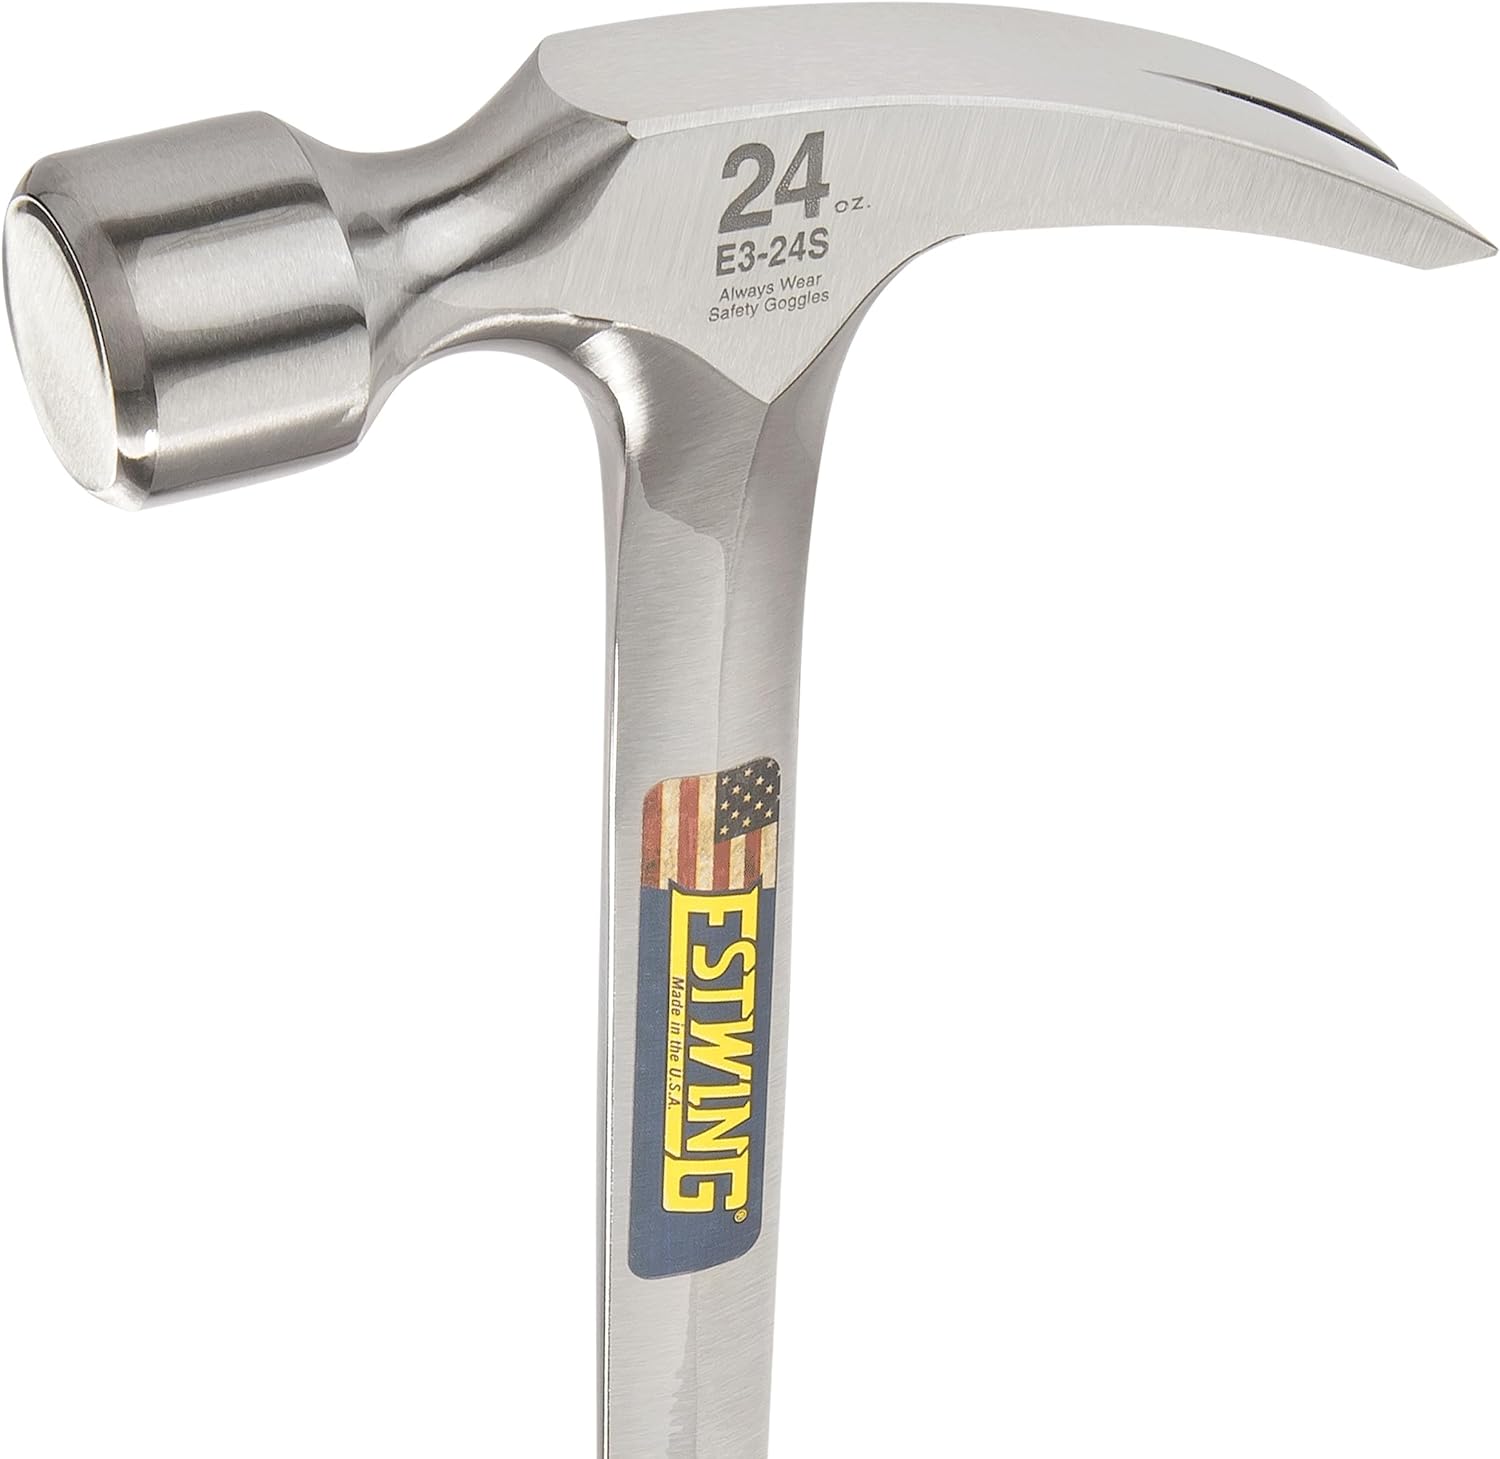 Estwing E3-24S 24 oz Smooth Face Framing Hammer